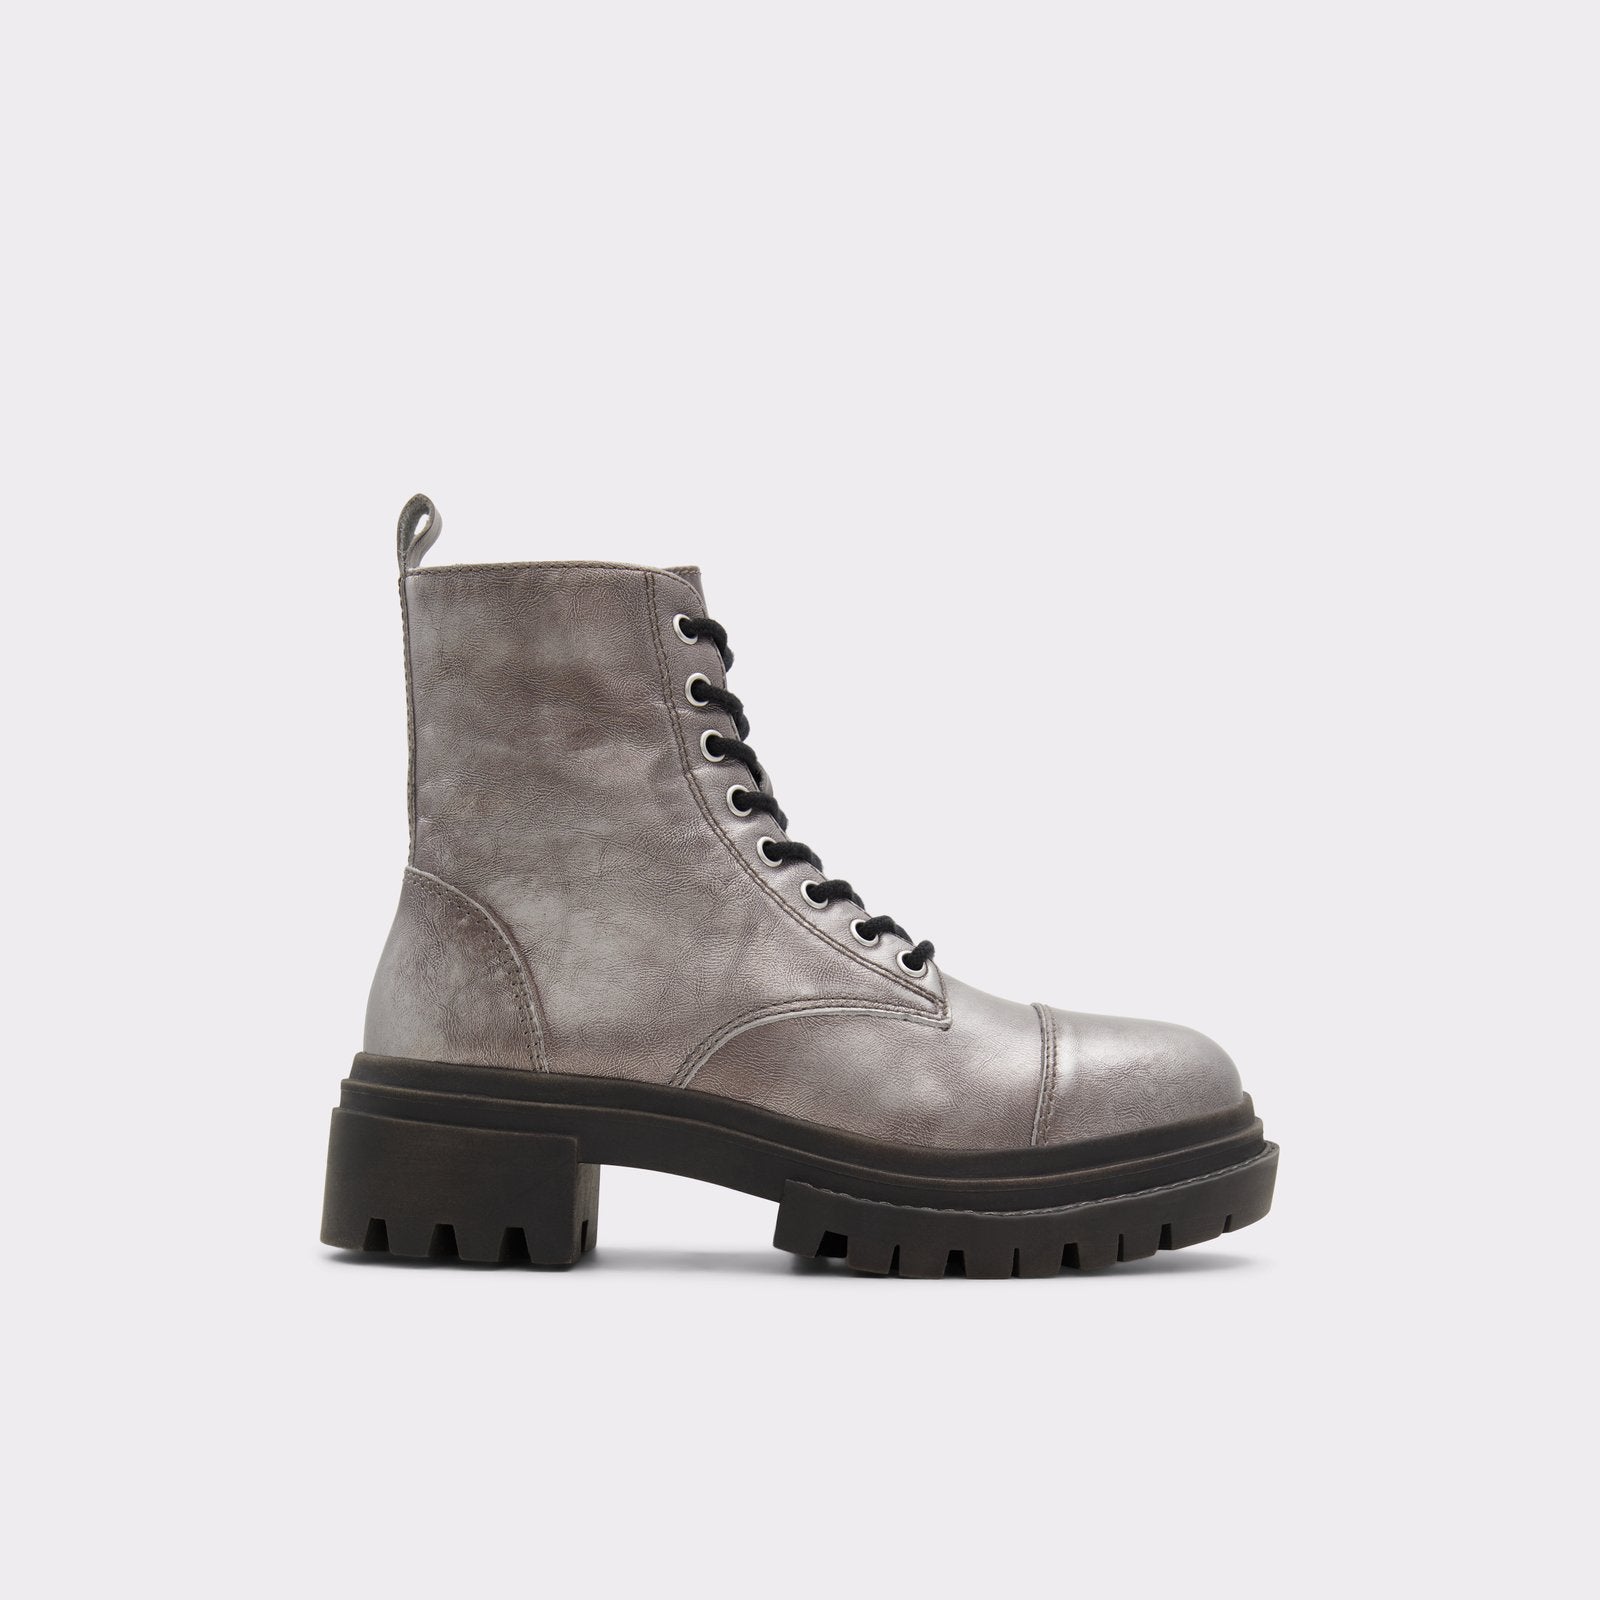 Aldo Women’s Chunky Boots Bigmark (Silver)